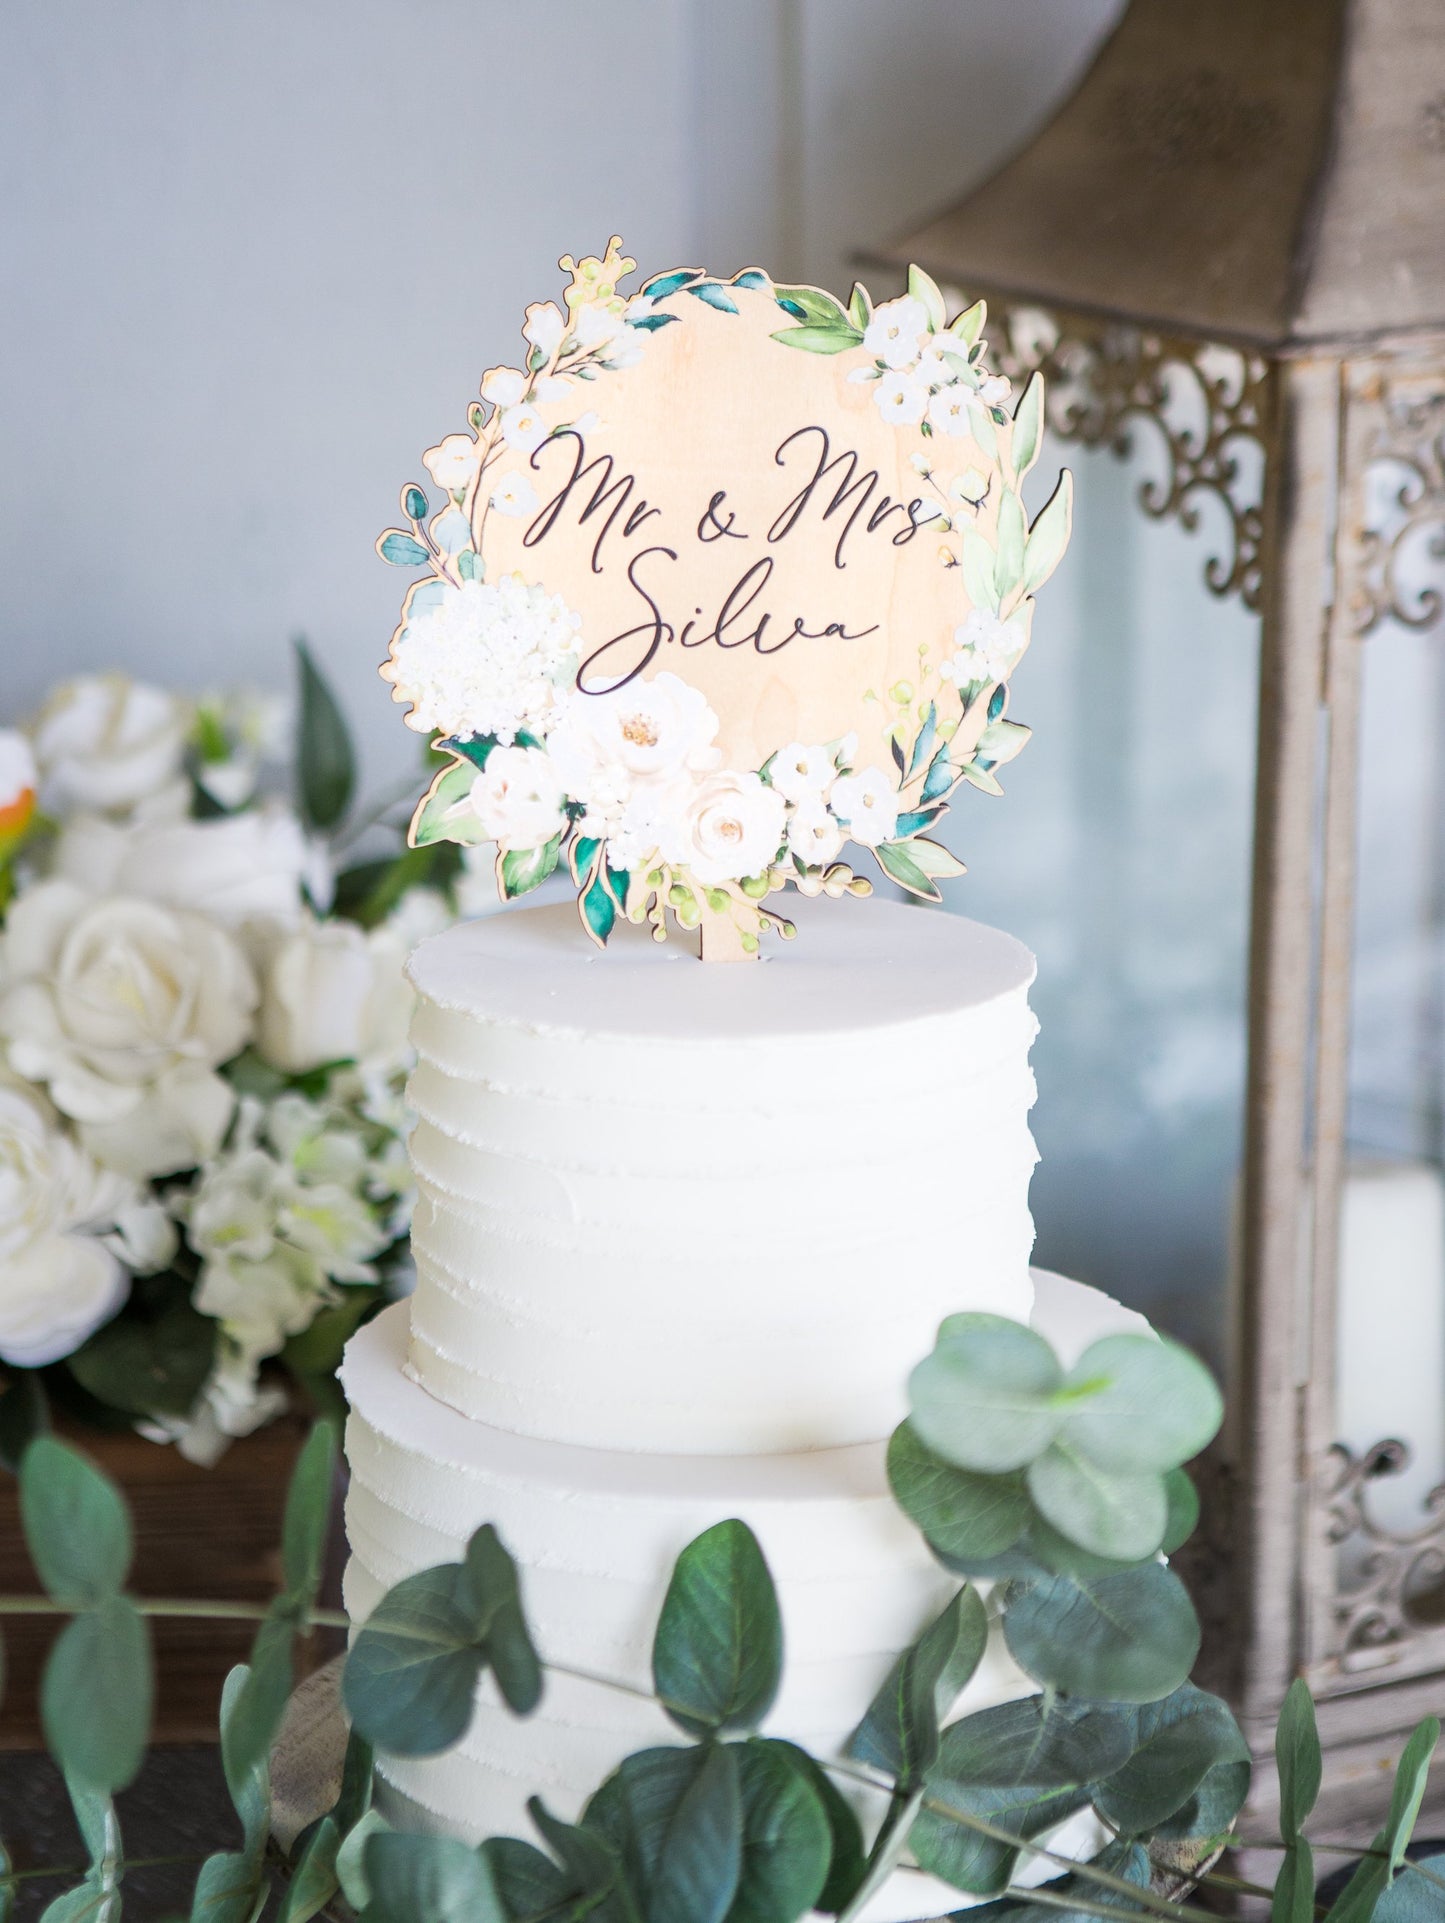 Floral Wreath Mr & Mrs Wedding Cake Topper - Wedding Decor Gifts